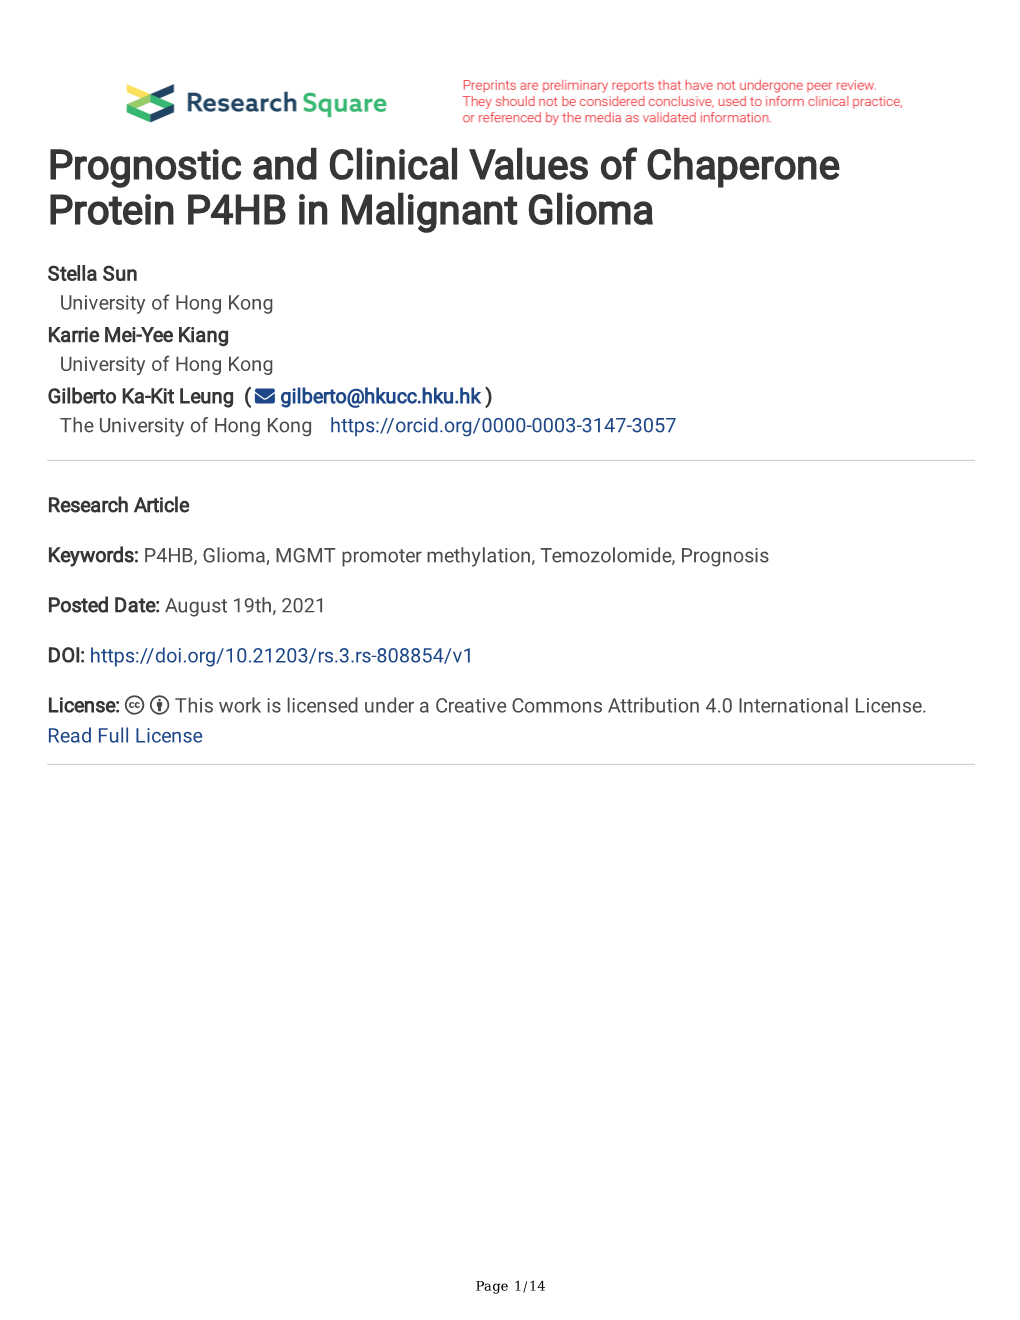 Prognostic and Clinical Values of Chaperone Protein P4HB in Malignant Glioma